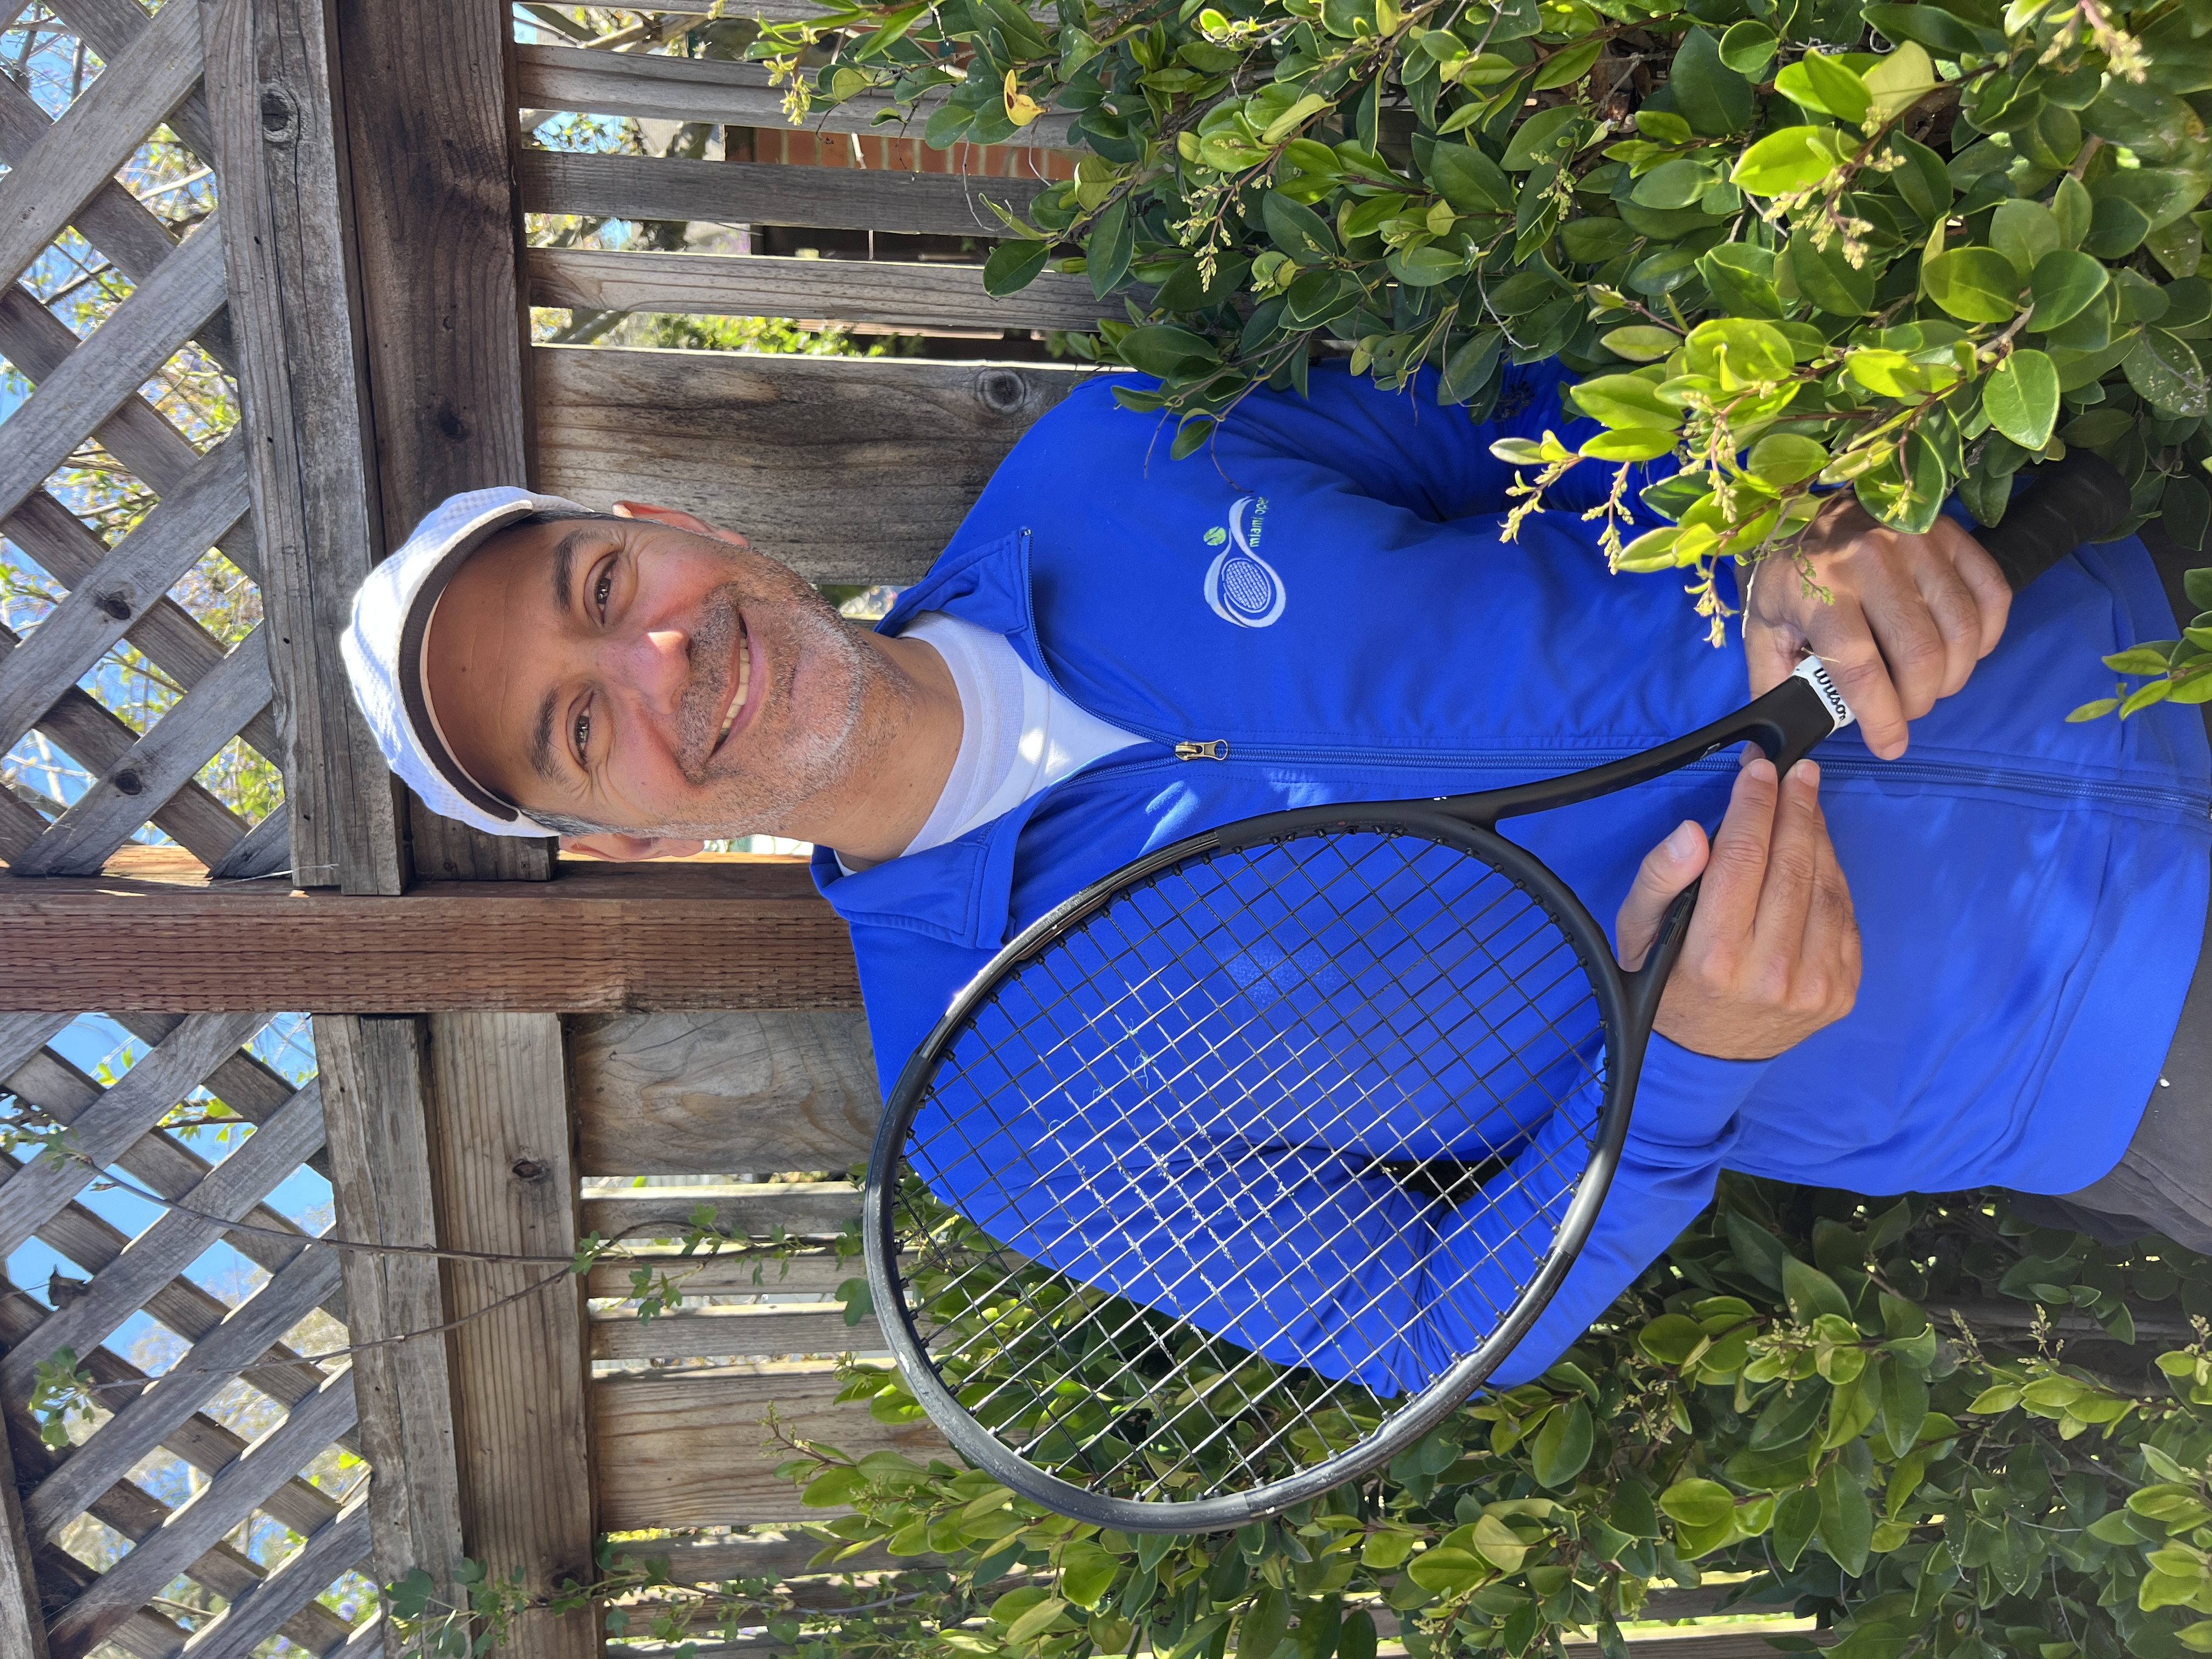 Coach H. teaches tennis lessons in Oakland, CA